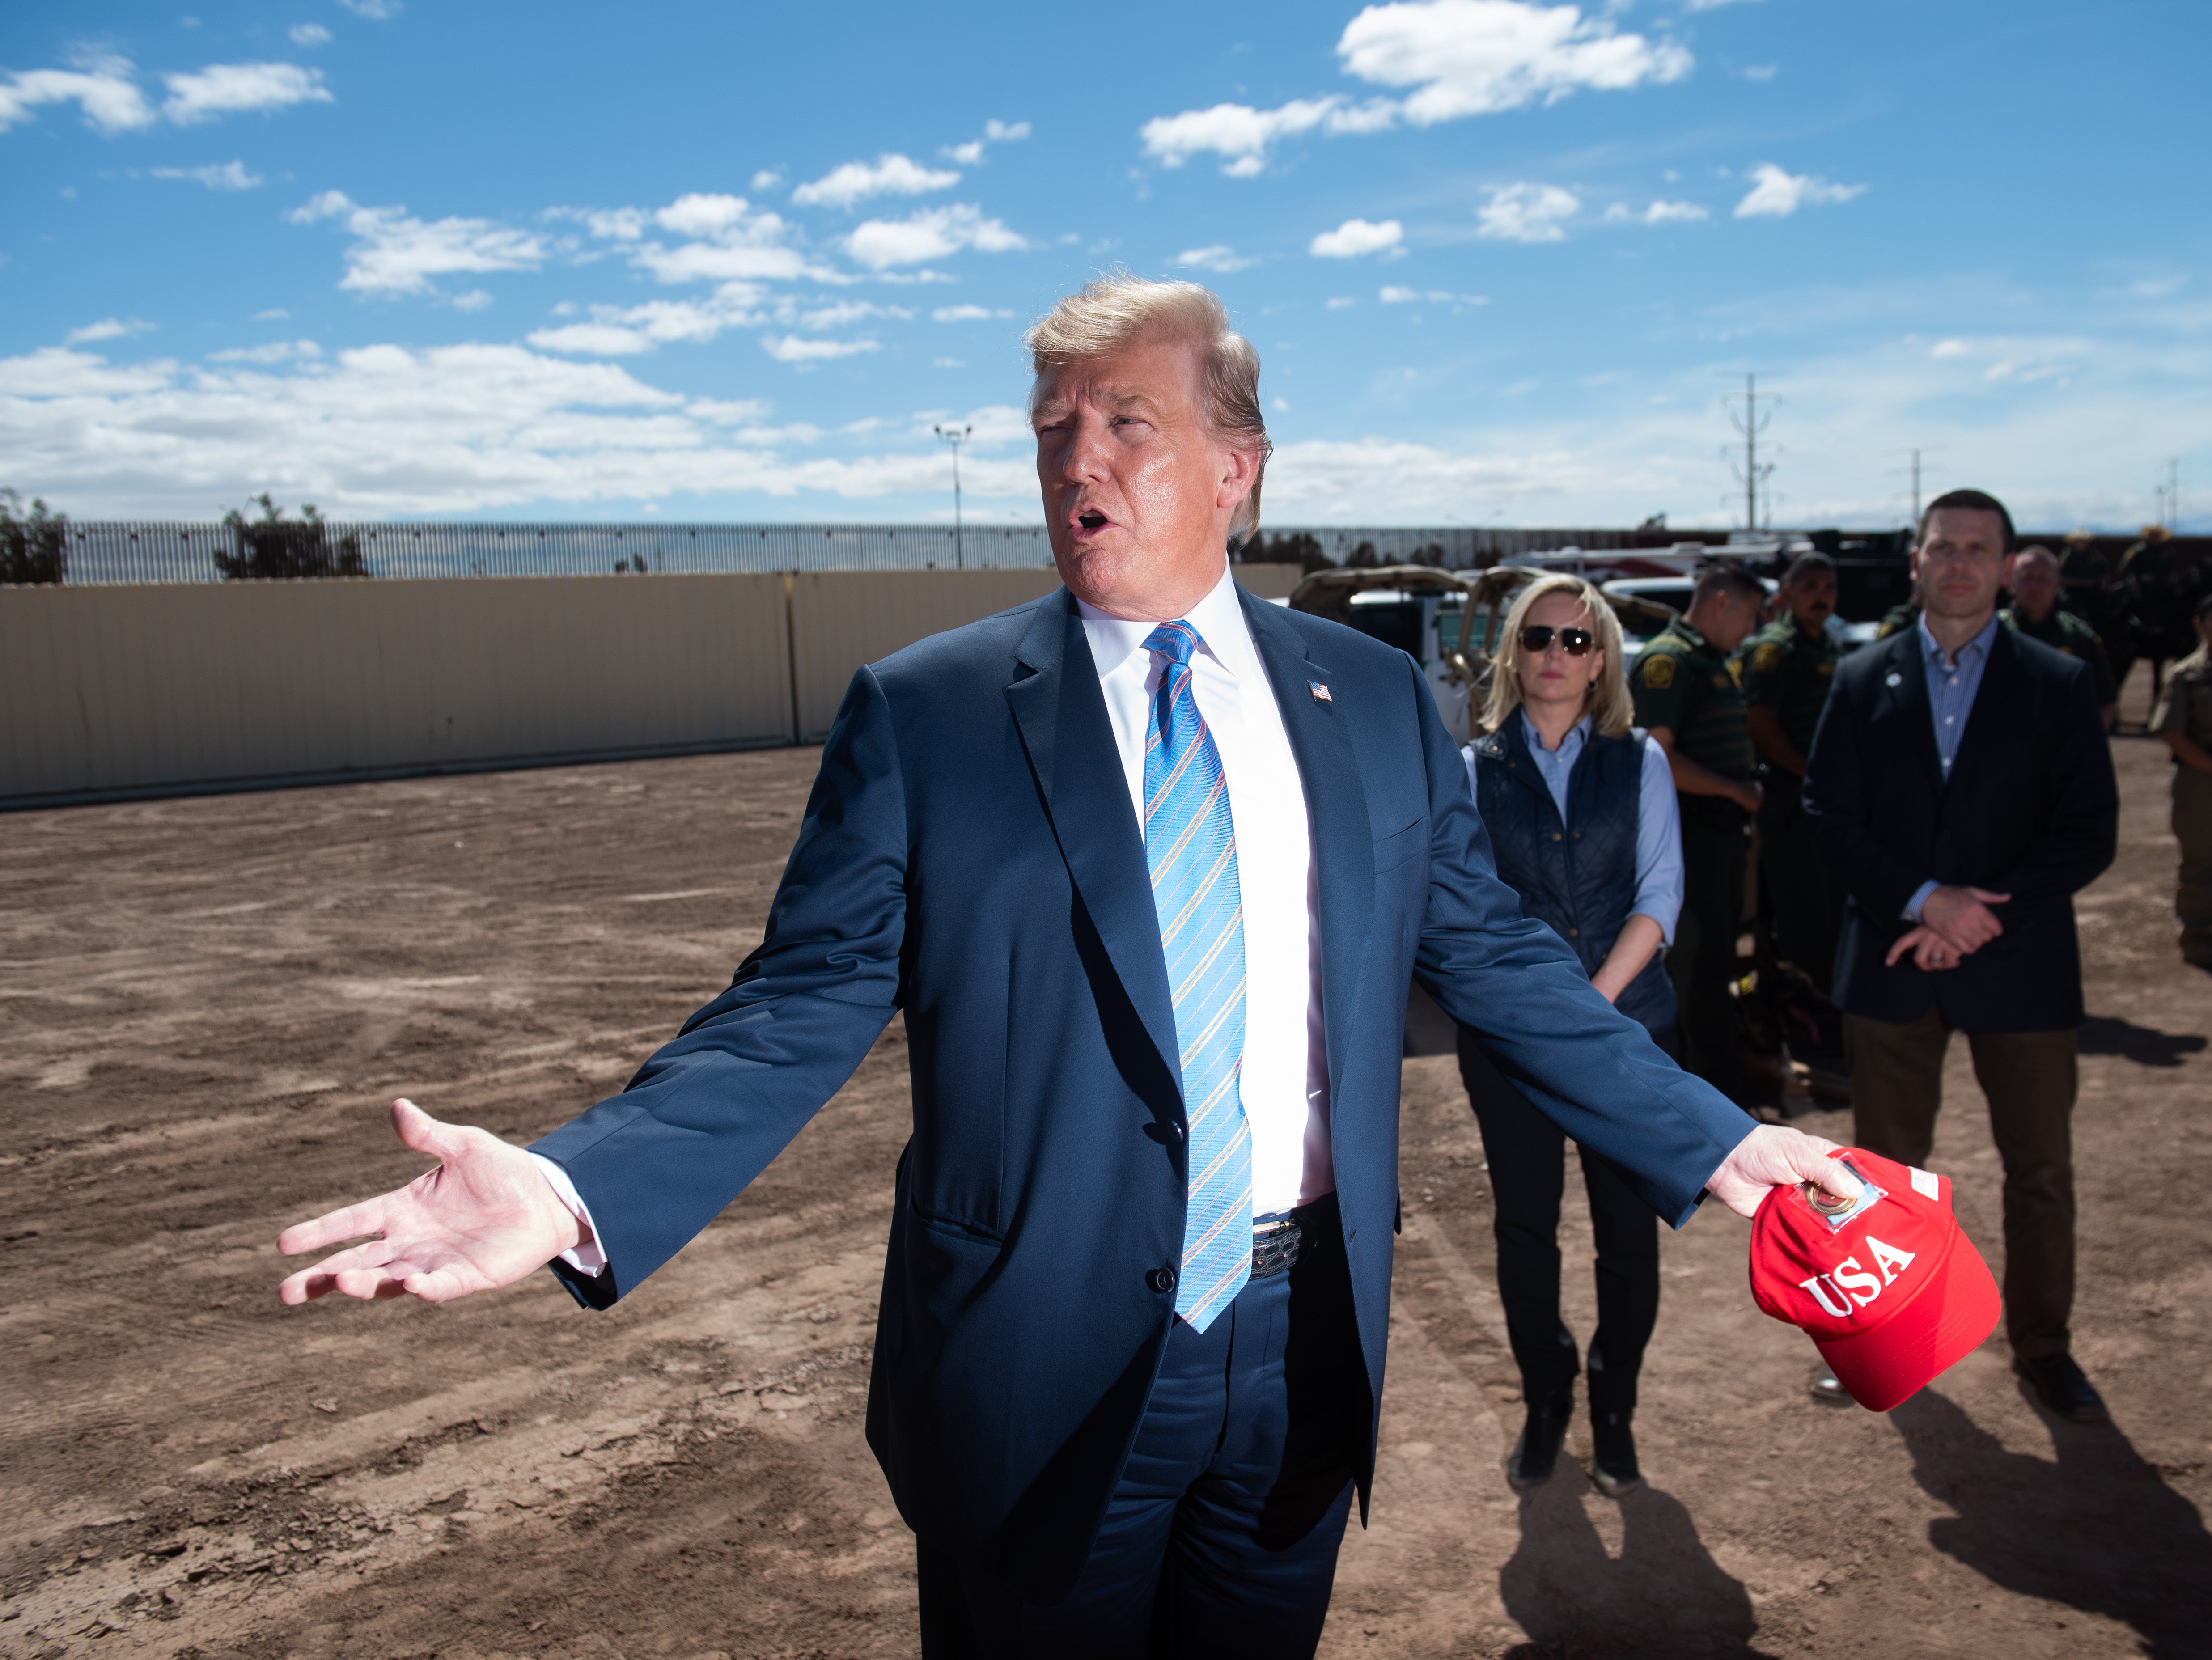 Homeland security Kirstjen Nielsen watches a Trump address on the border